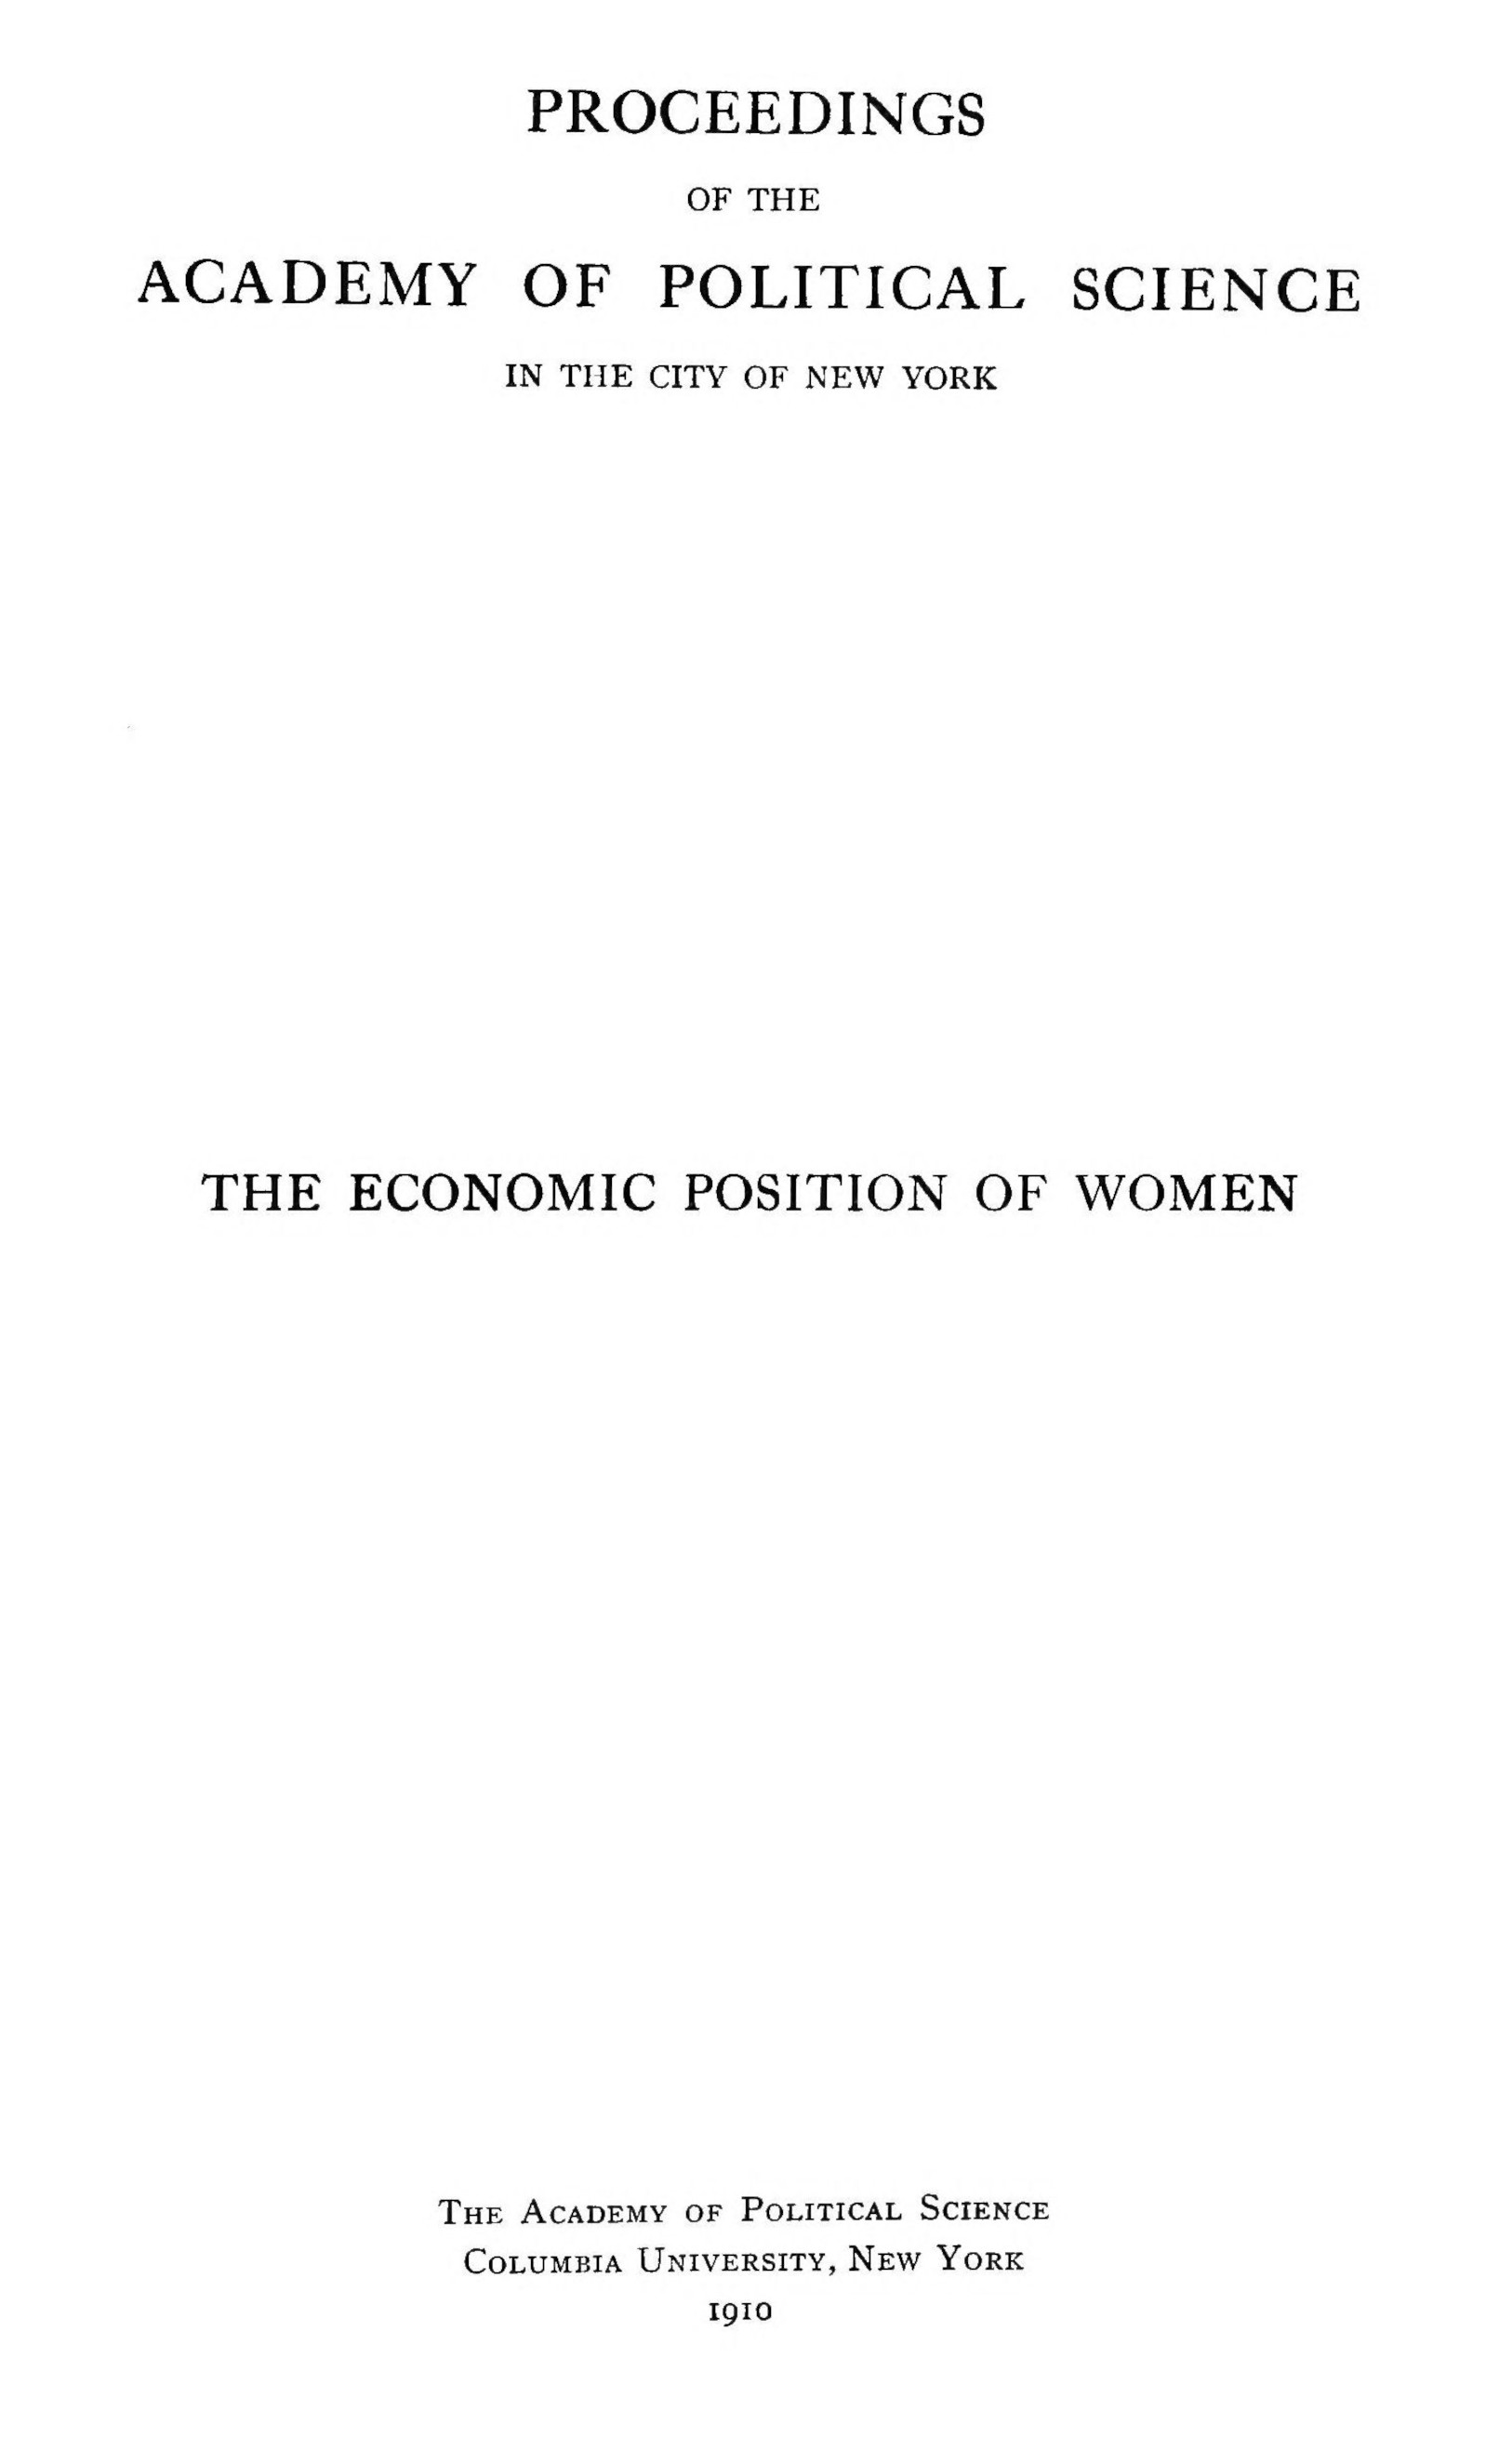 The economic position of women